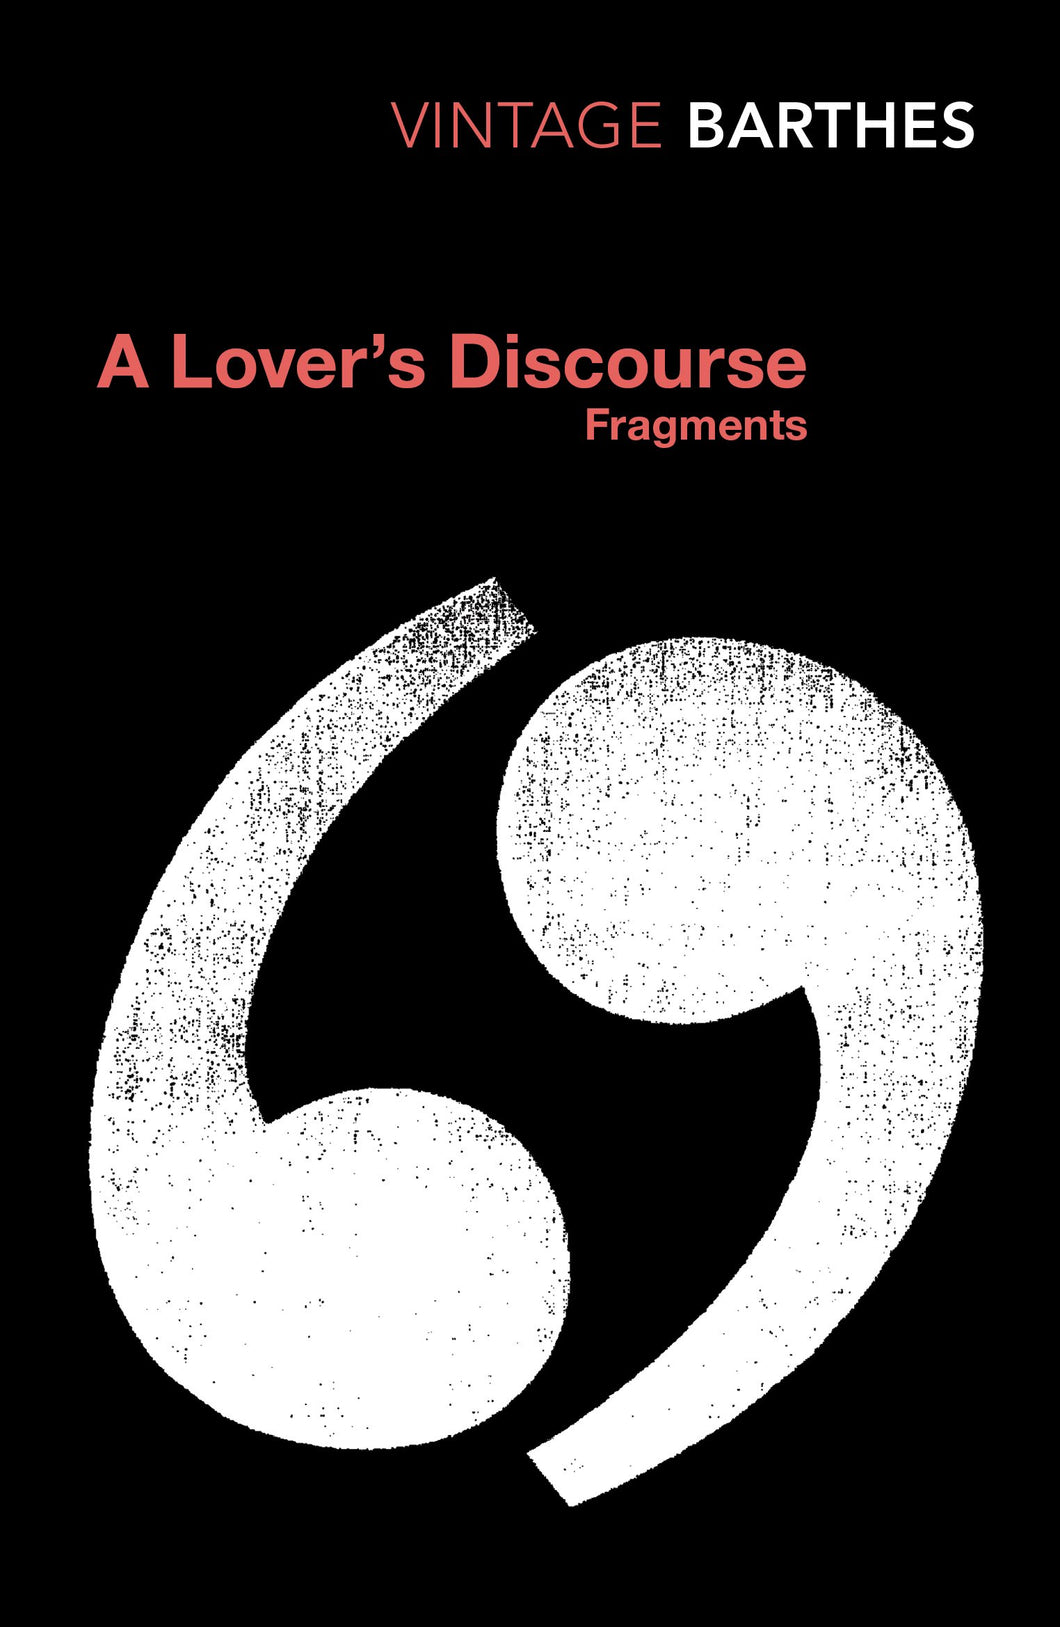 A Lover's Discourse : Fragments ร้านหนังสือและสิ่งของ เป็นร้านหนังสือภาษาอังกฤษหายาก และร้านกาแฟ หรือ บุ๊คคาเฟ่ ตั้งอยู่สุขุมวิท กรุงเทพ